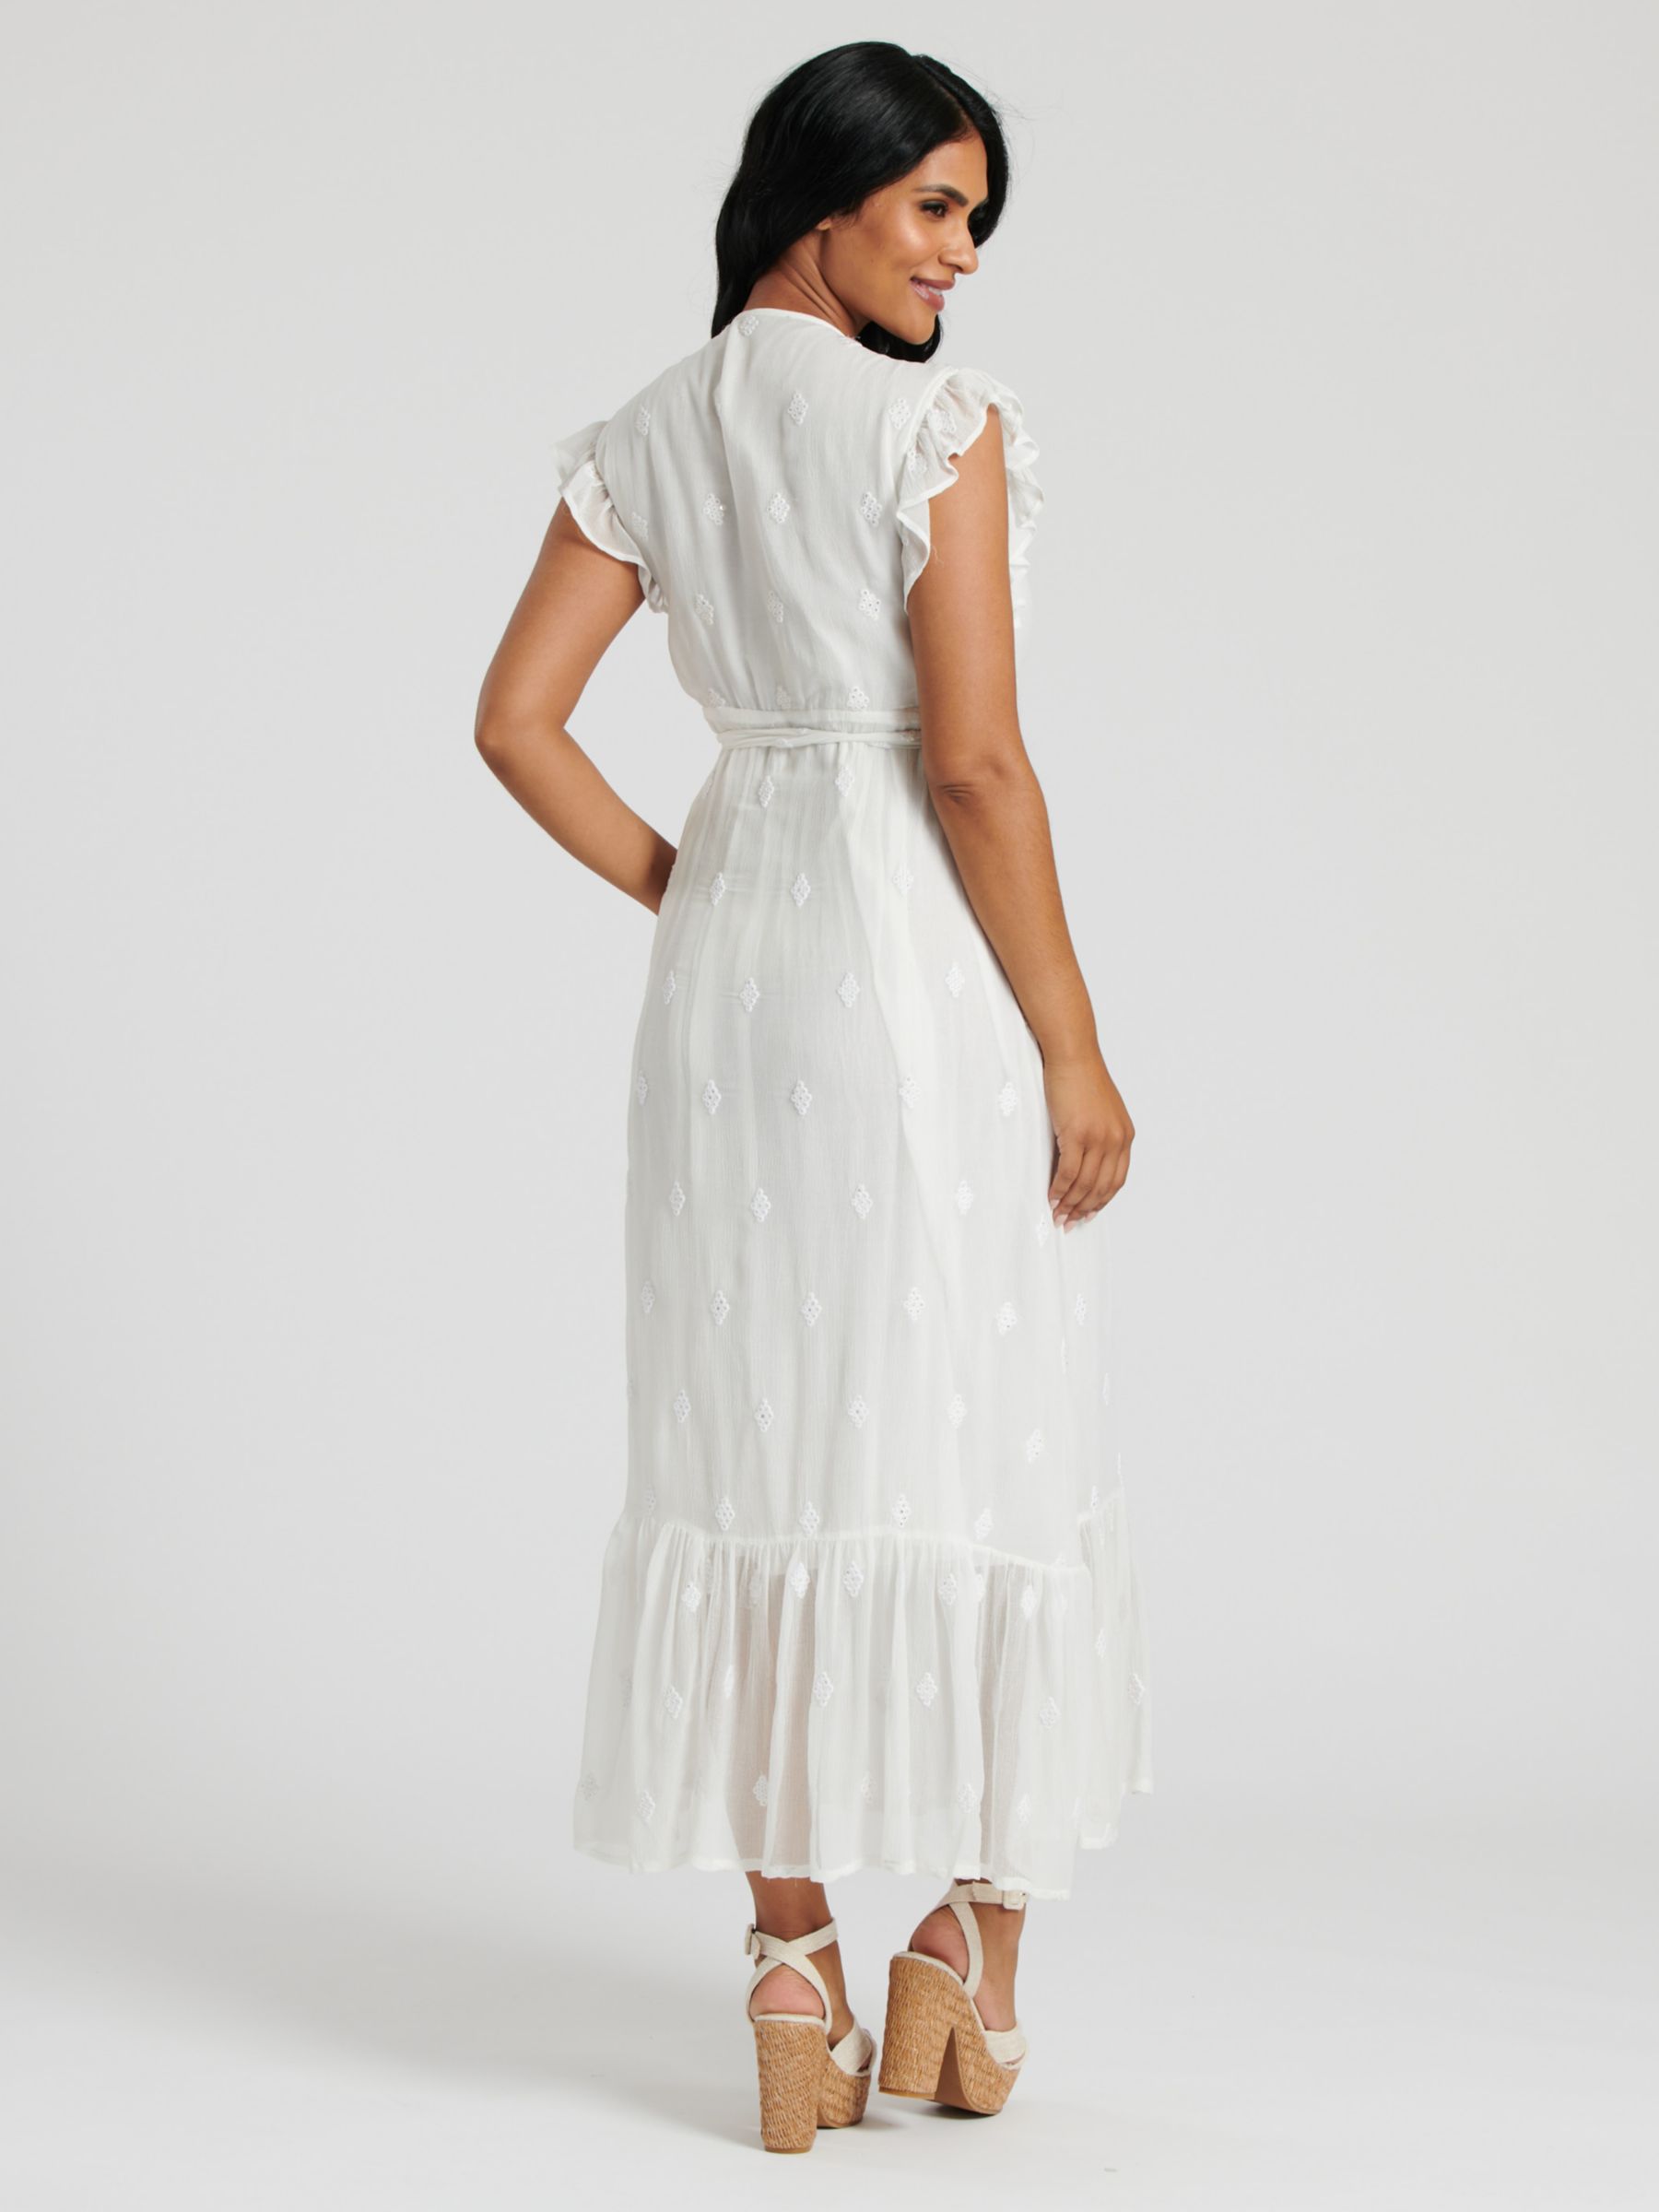 South Beach Sequin Detail Wrap Midi Dress, White, 8